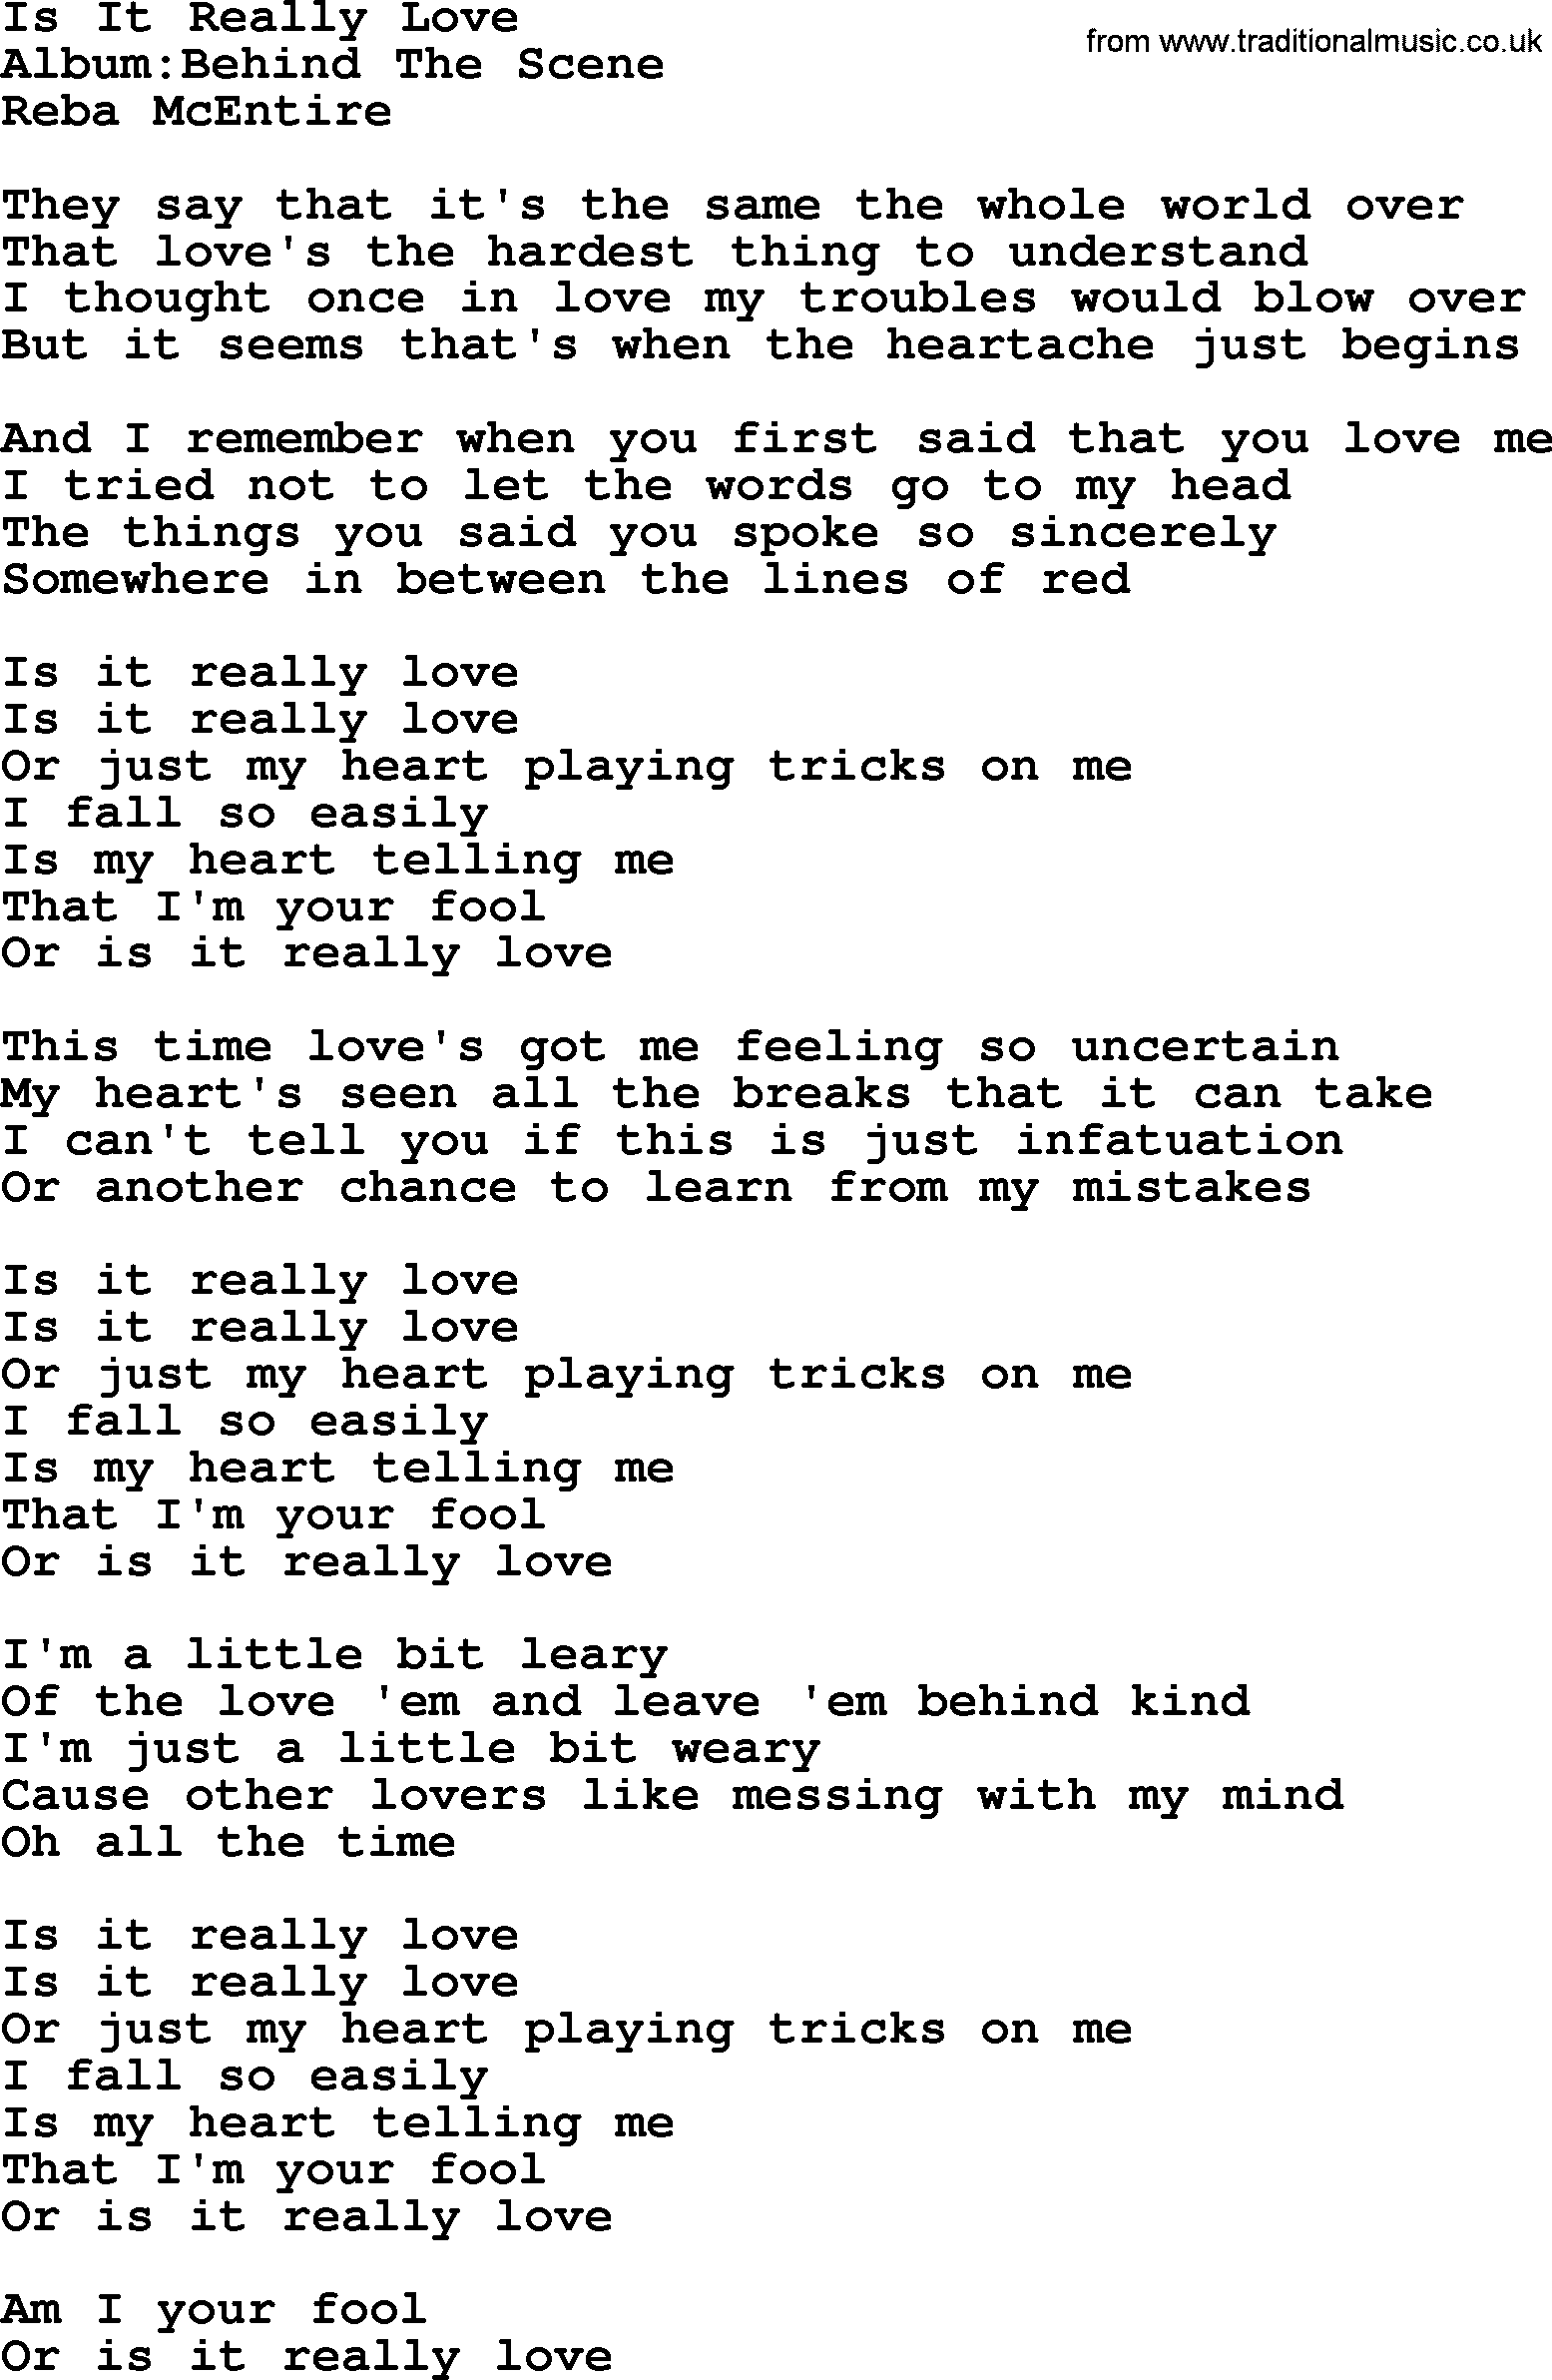 Reba McEntire song: Is It Really Love lyrics